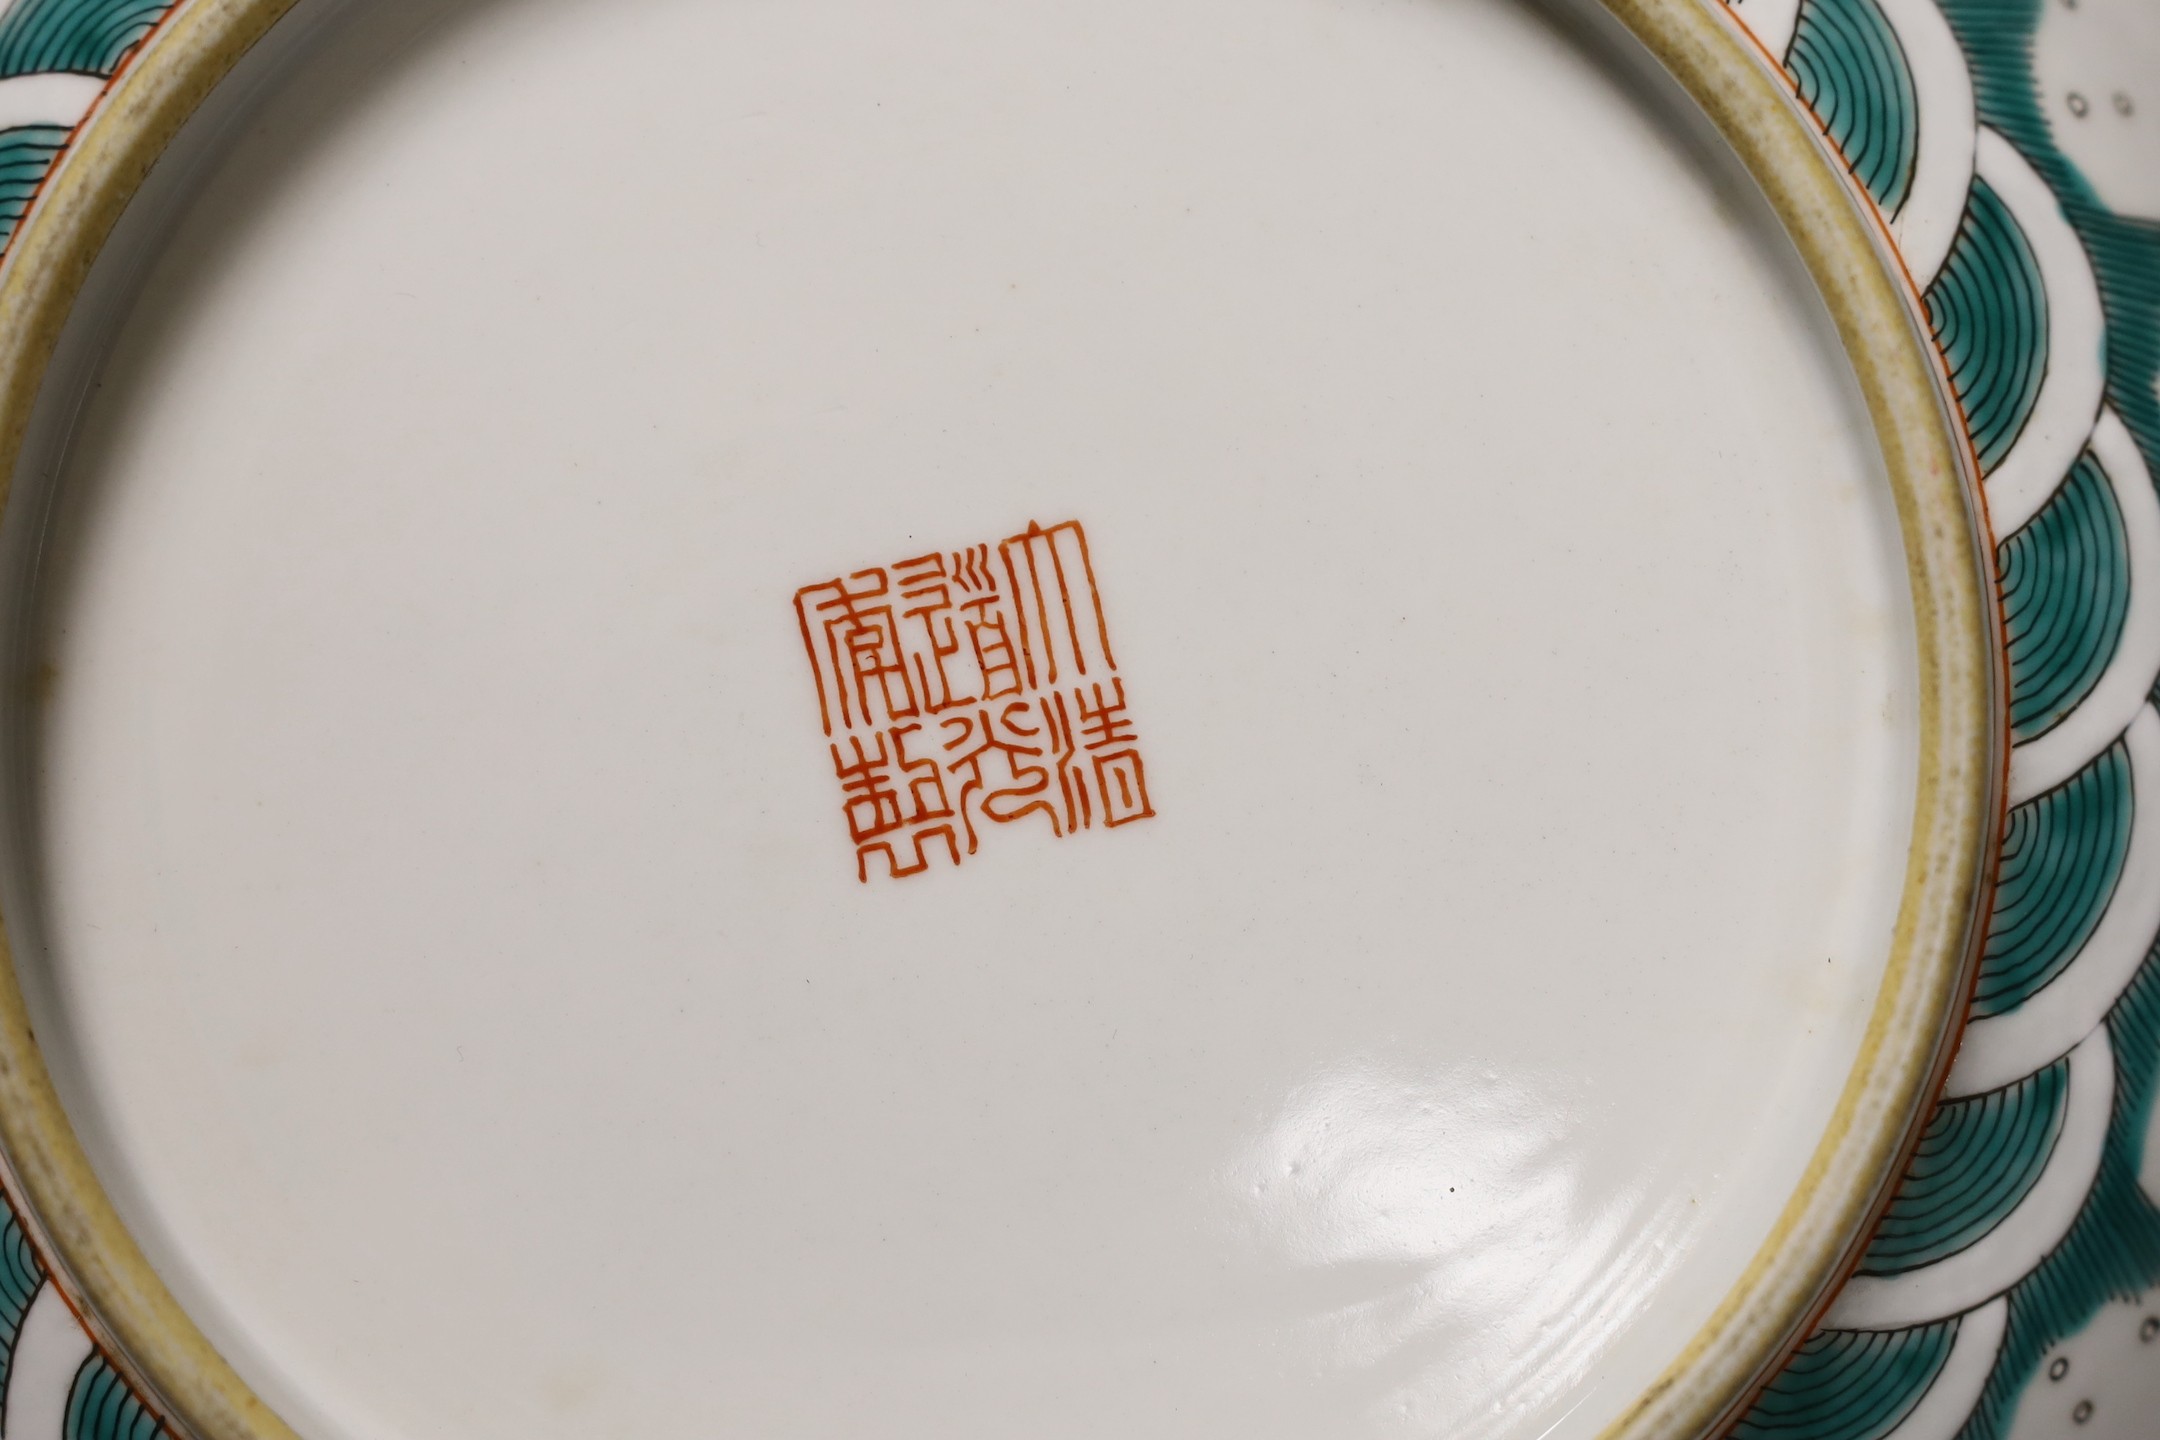 A Chinese enamelled porcelain ‘dragon’ dish, 22cm